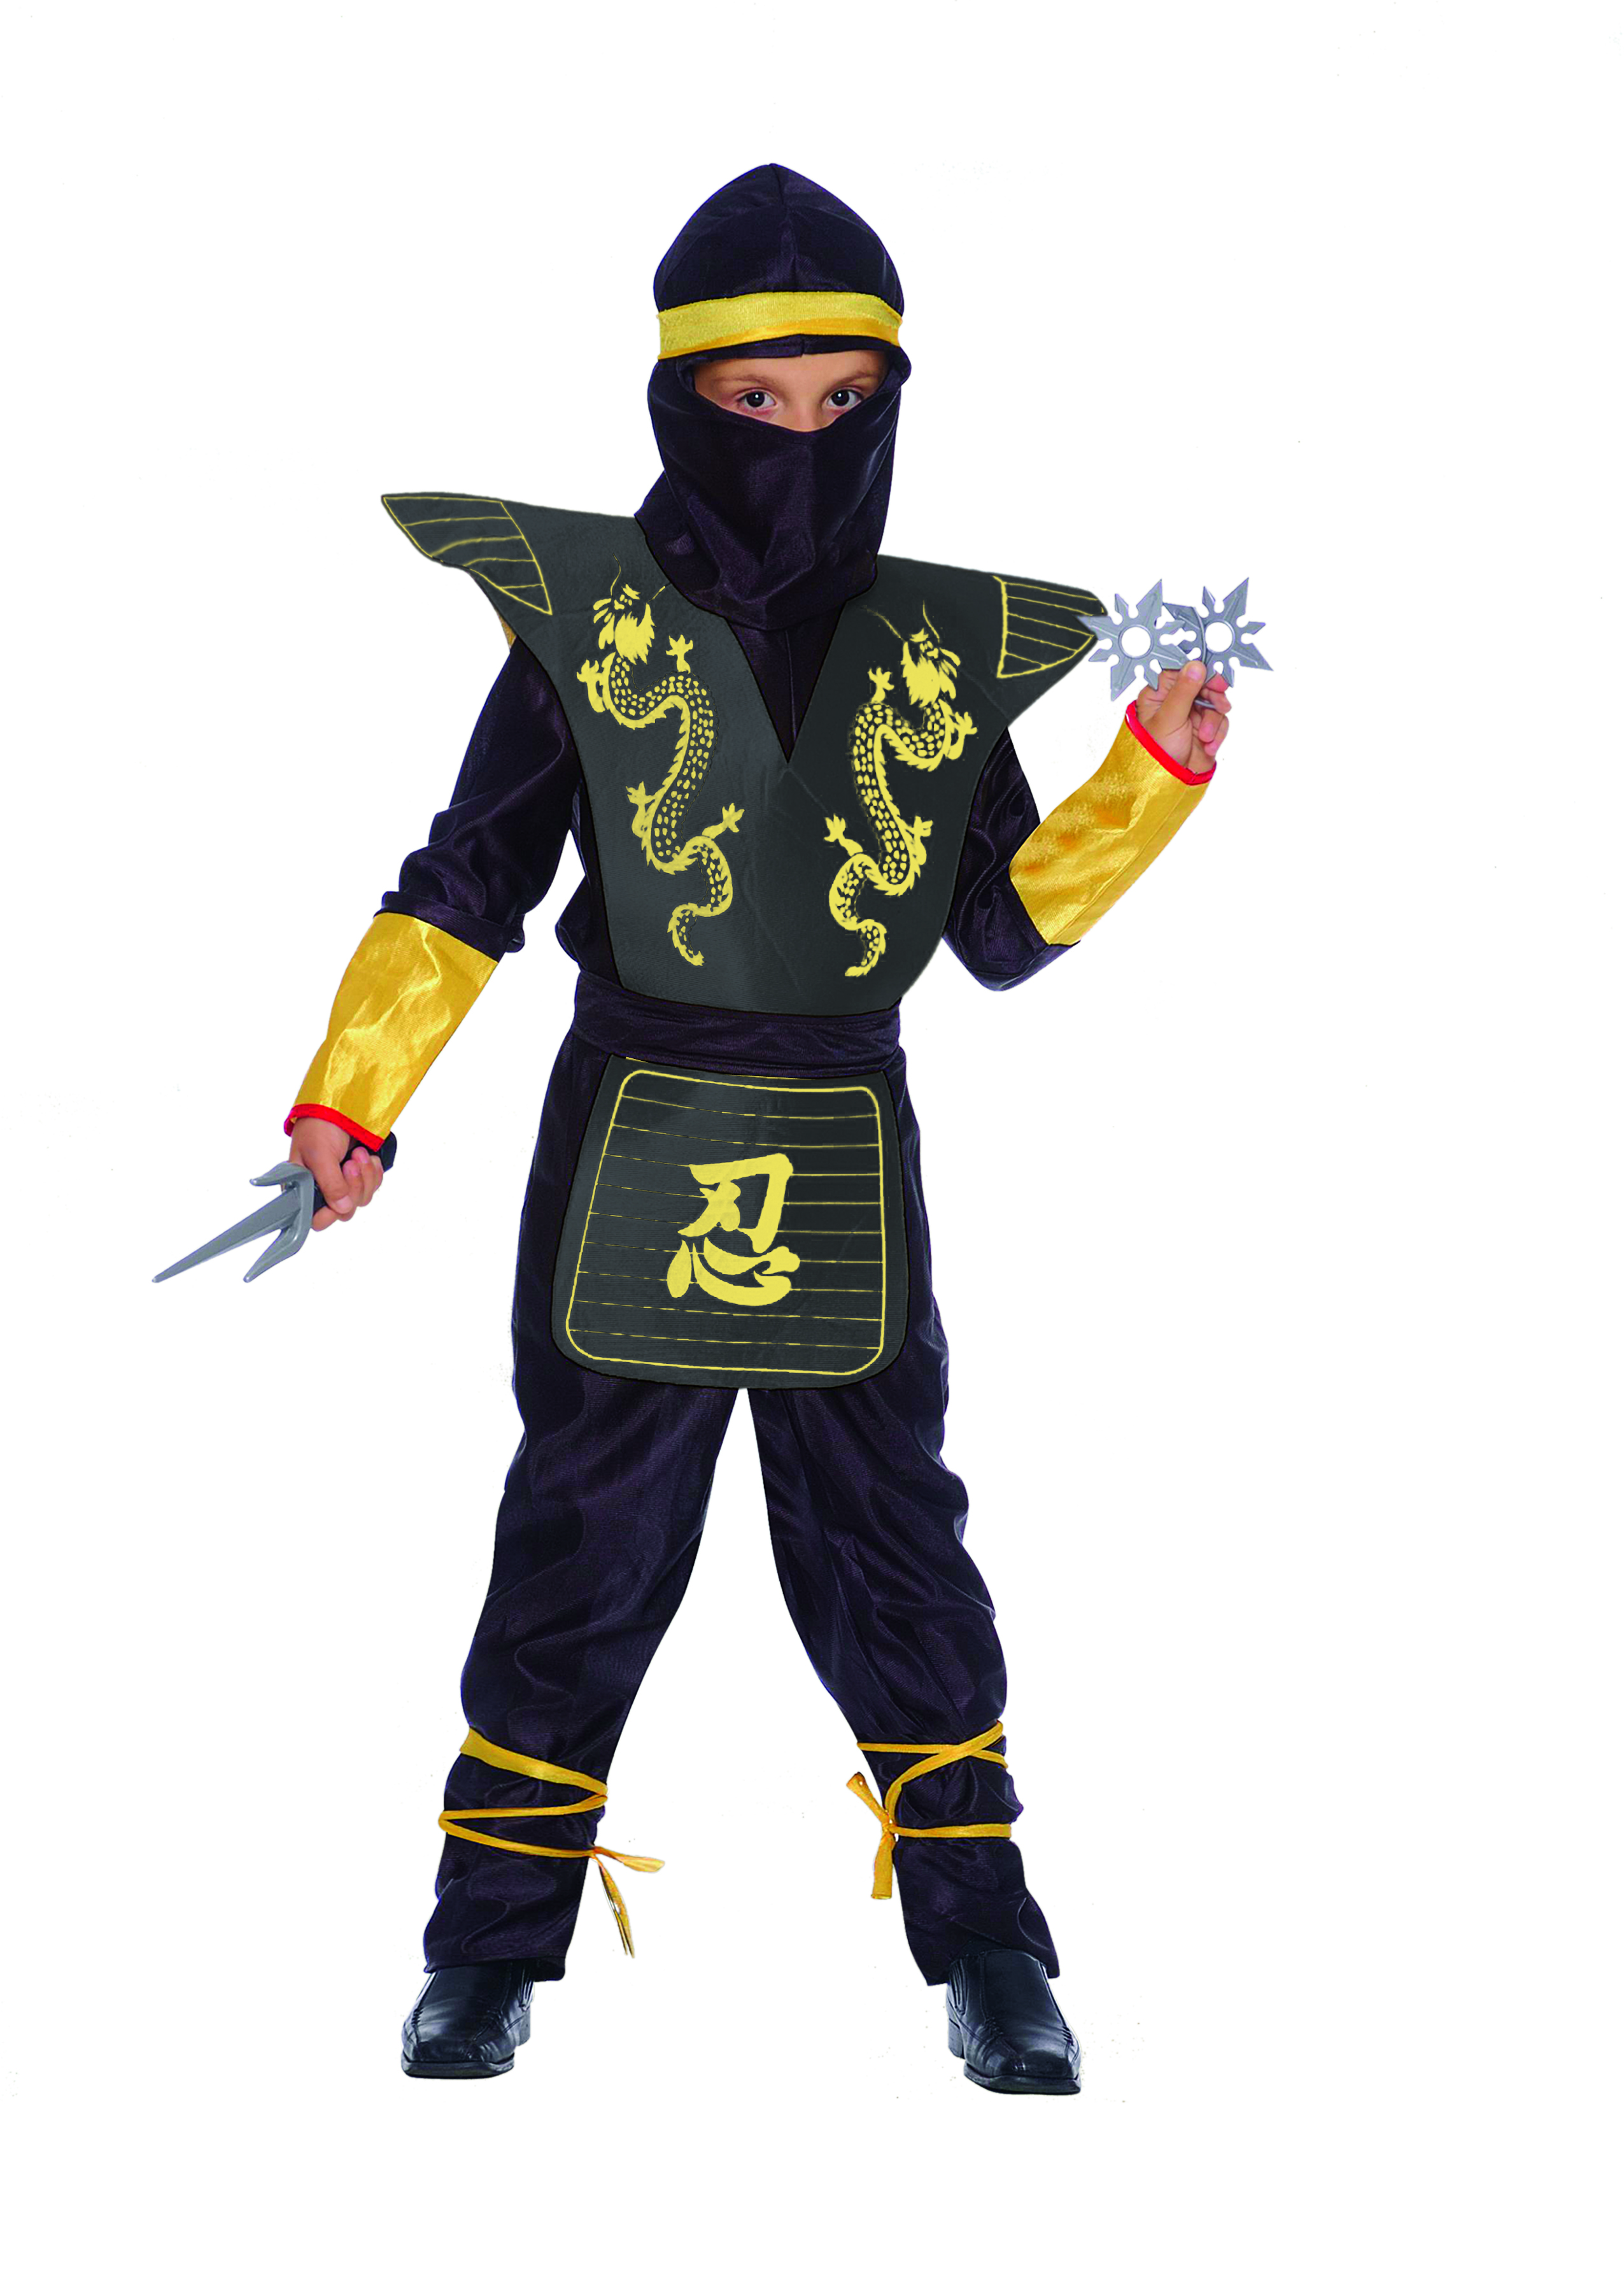 Ciao - Costume - Black Ninja Deluxe Set (98 cm) (18160.4-6)